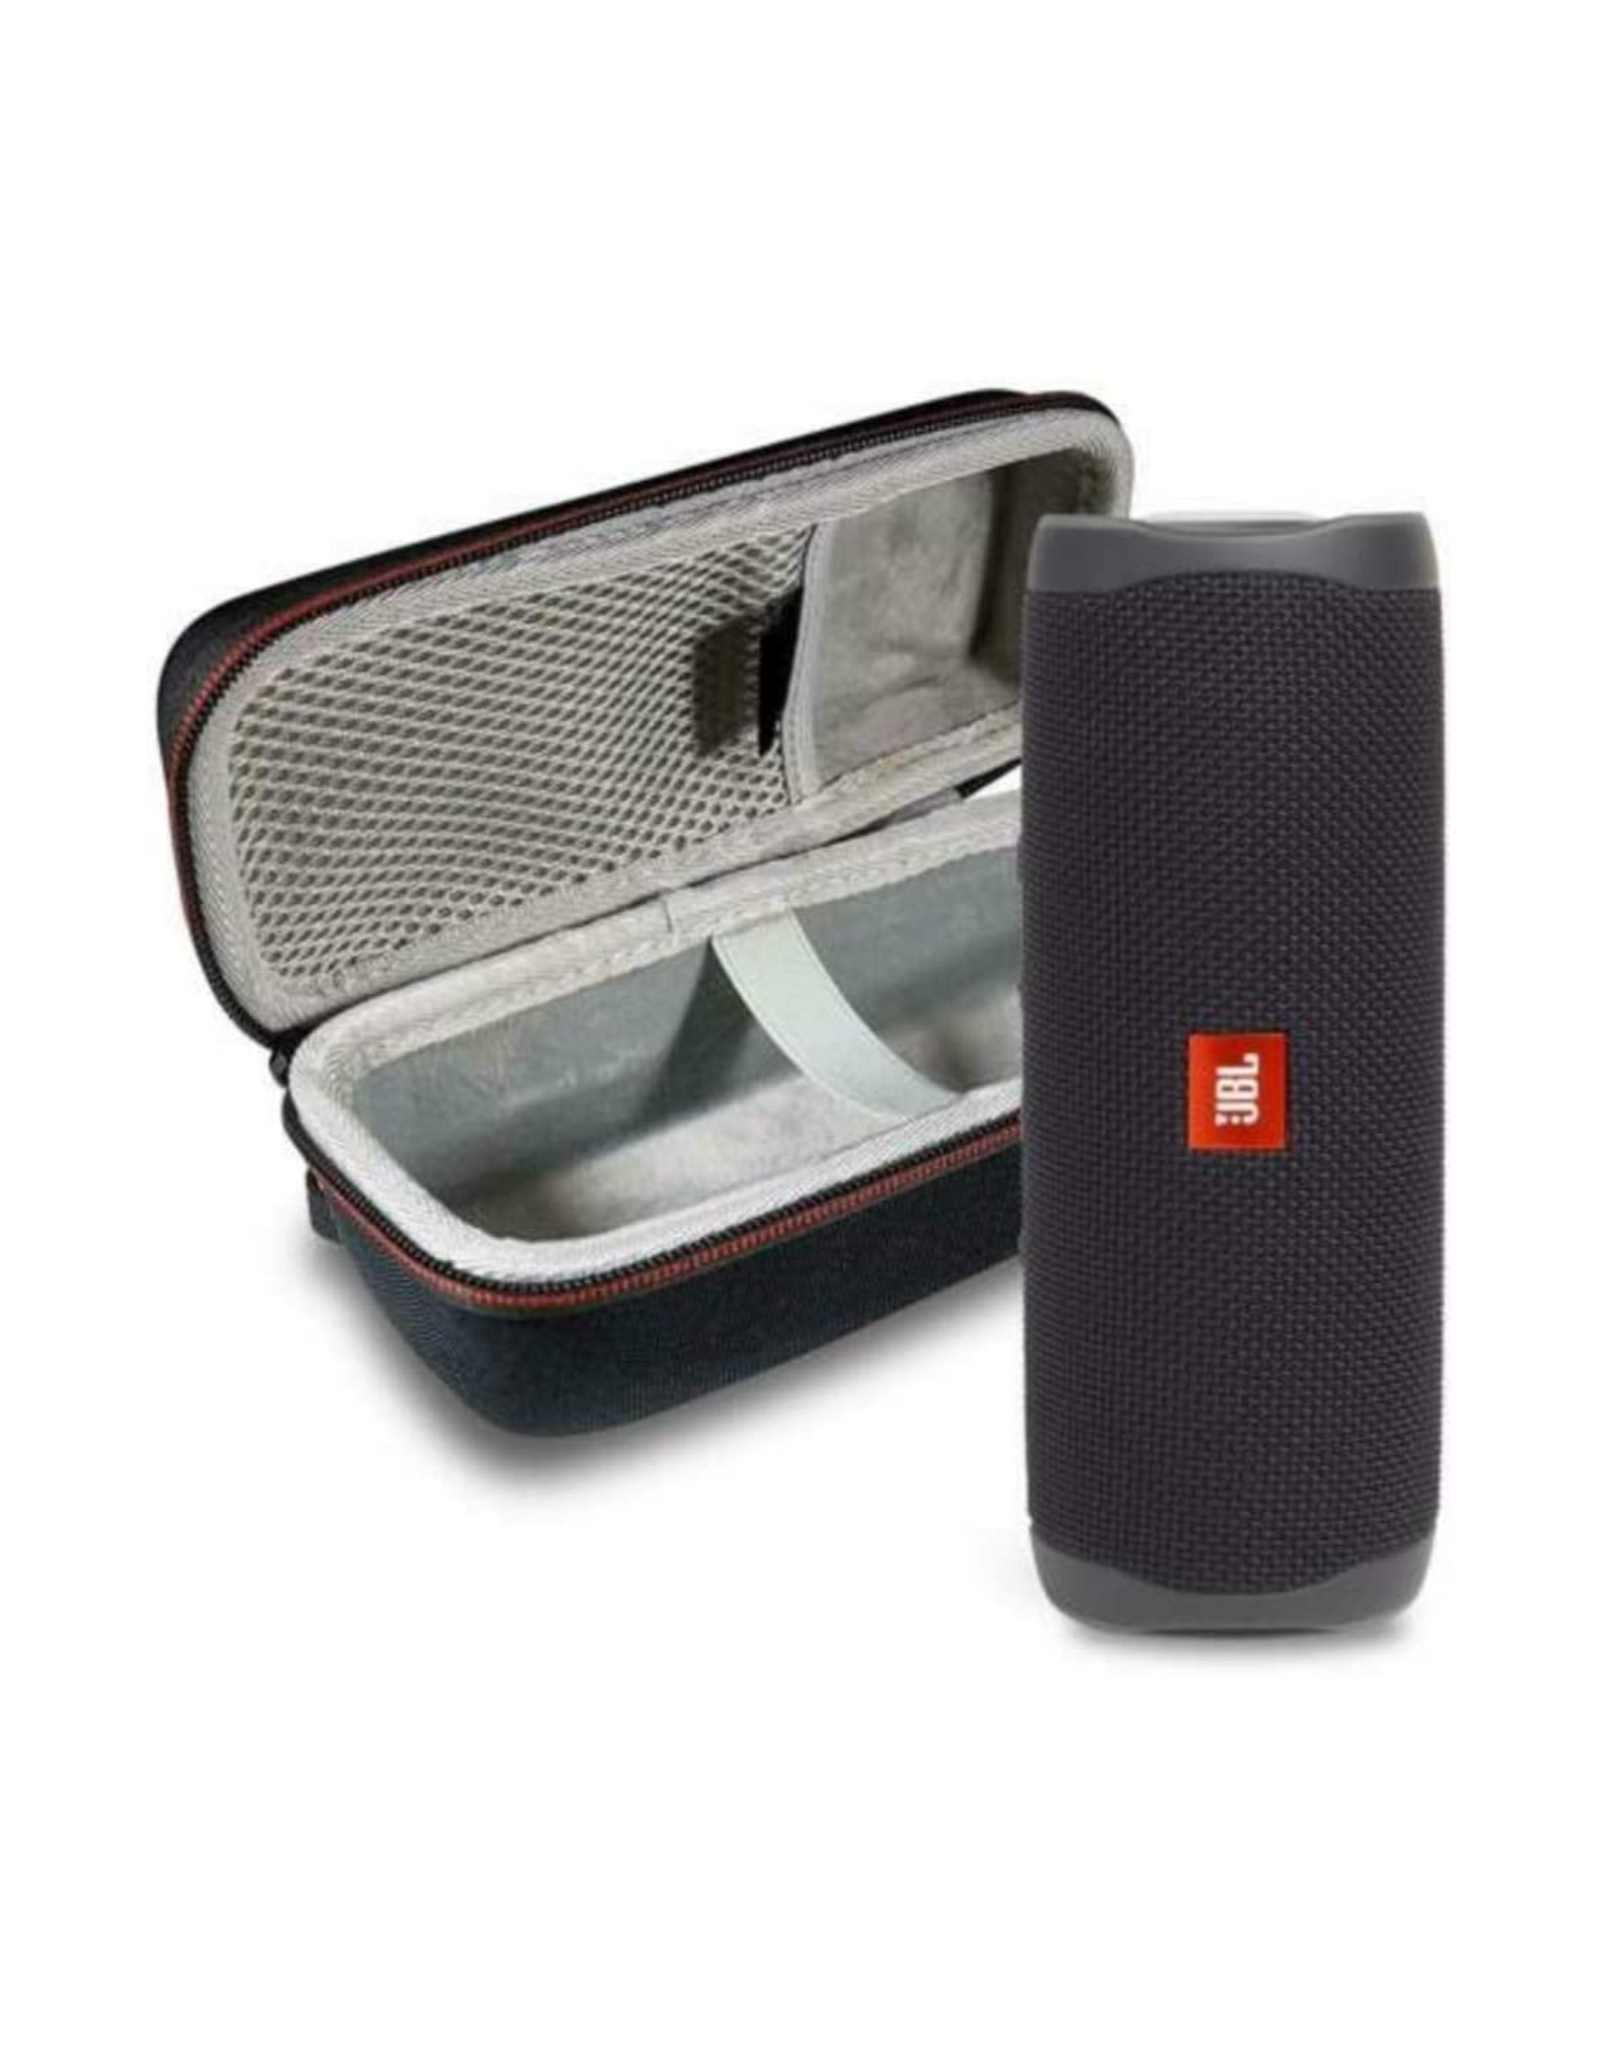 BL Flip 5 Waterproof Portable Wireless Bluetooth Speaker and Hardshell Protective Case Bundle, Black